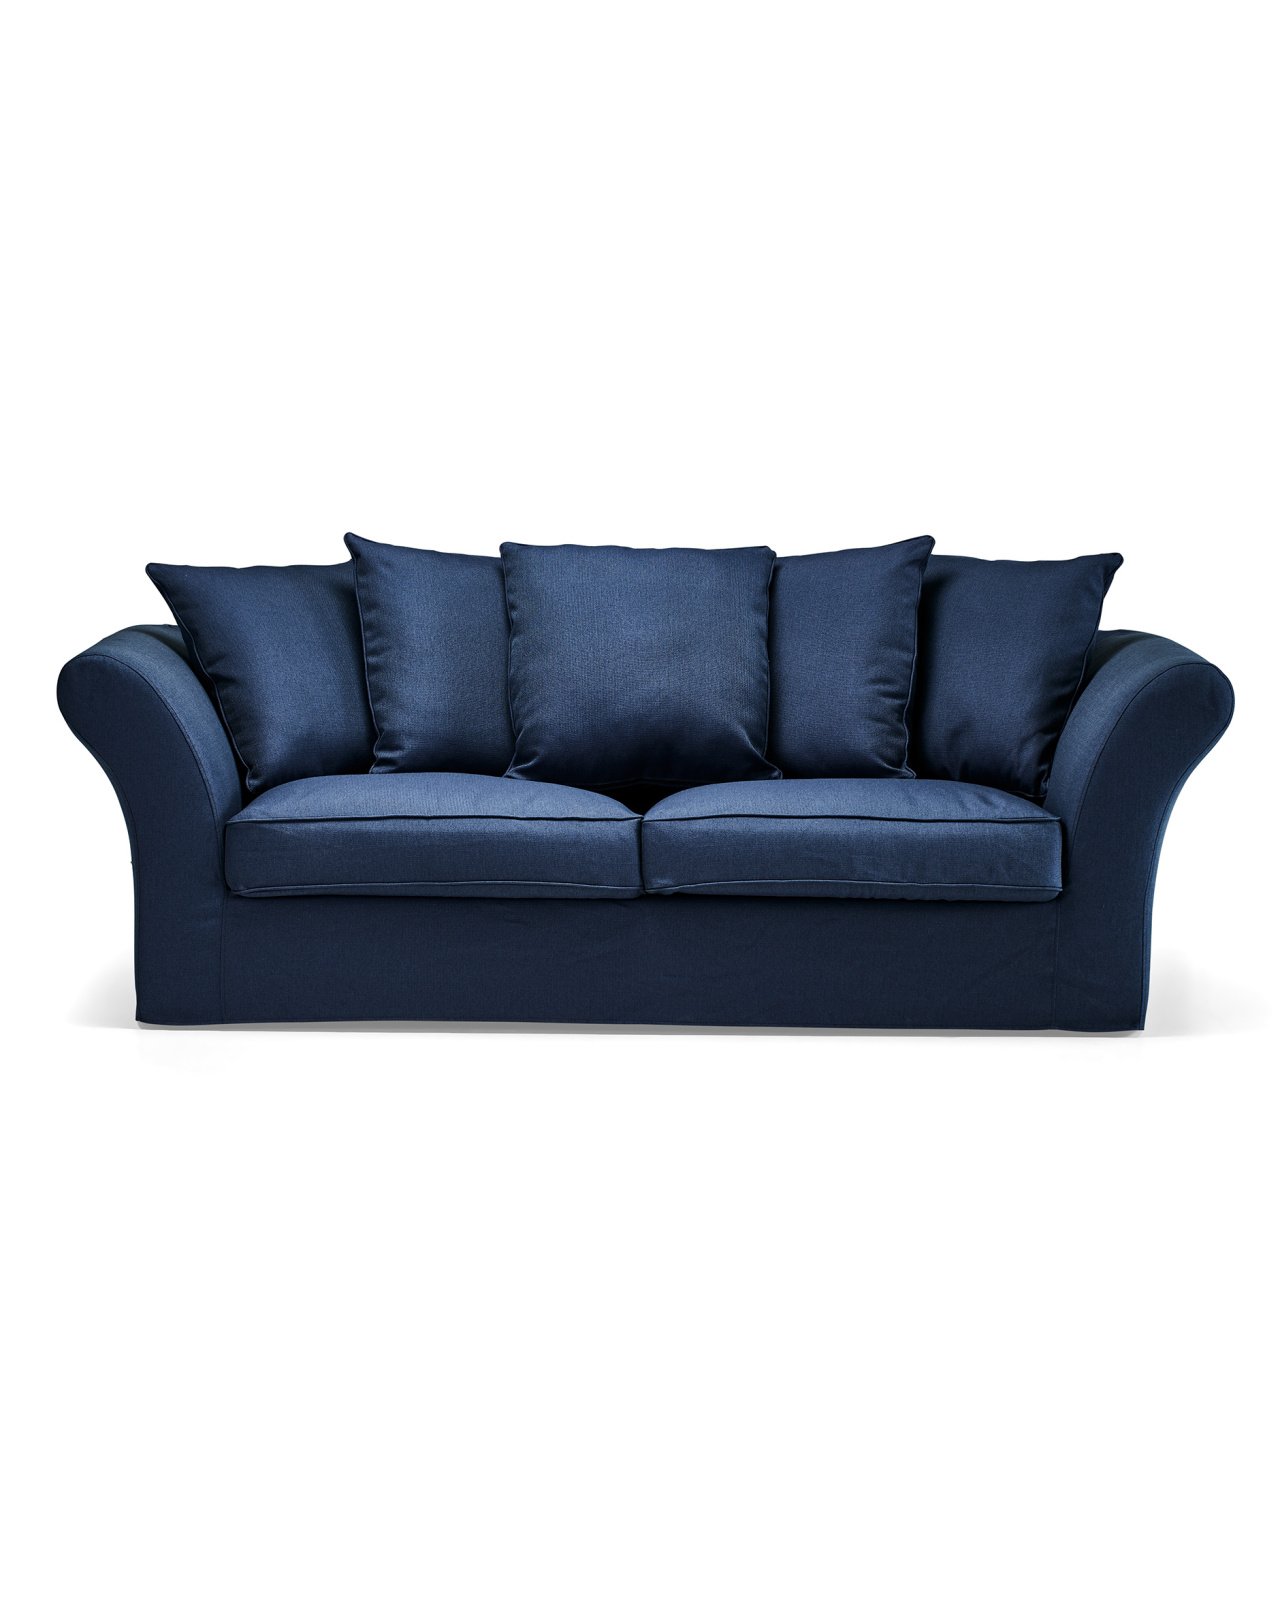 Hampton-sohva, indigo 3:n istuttava